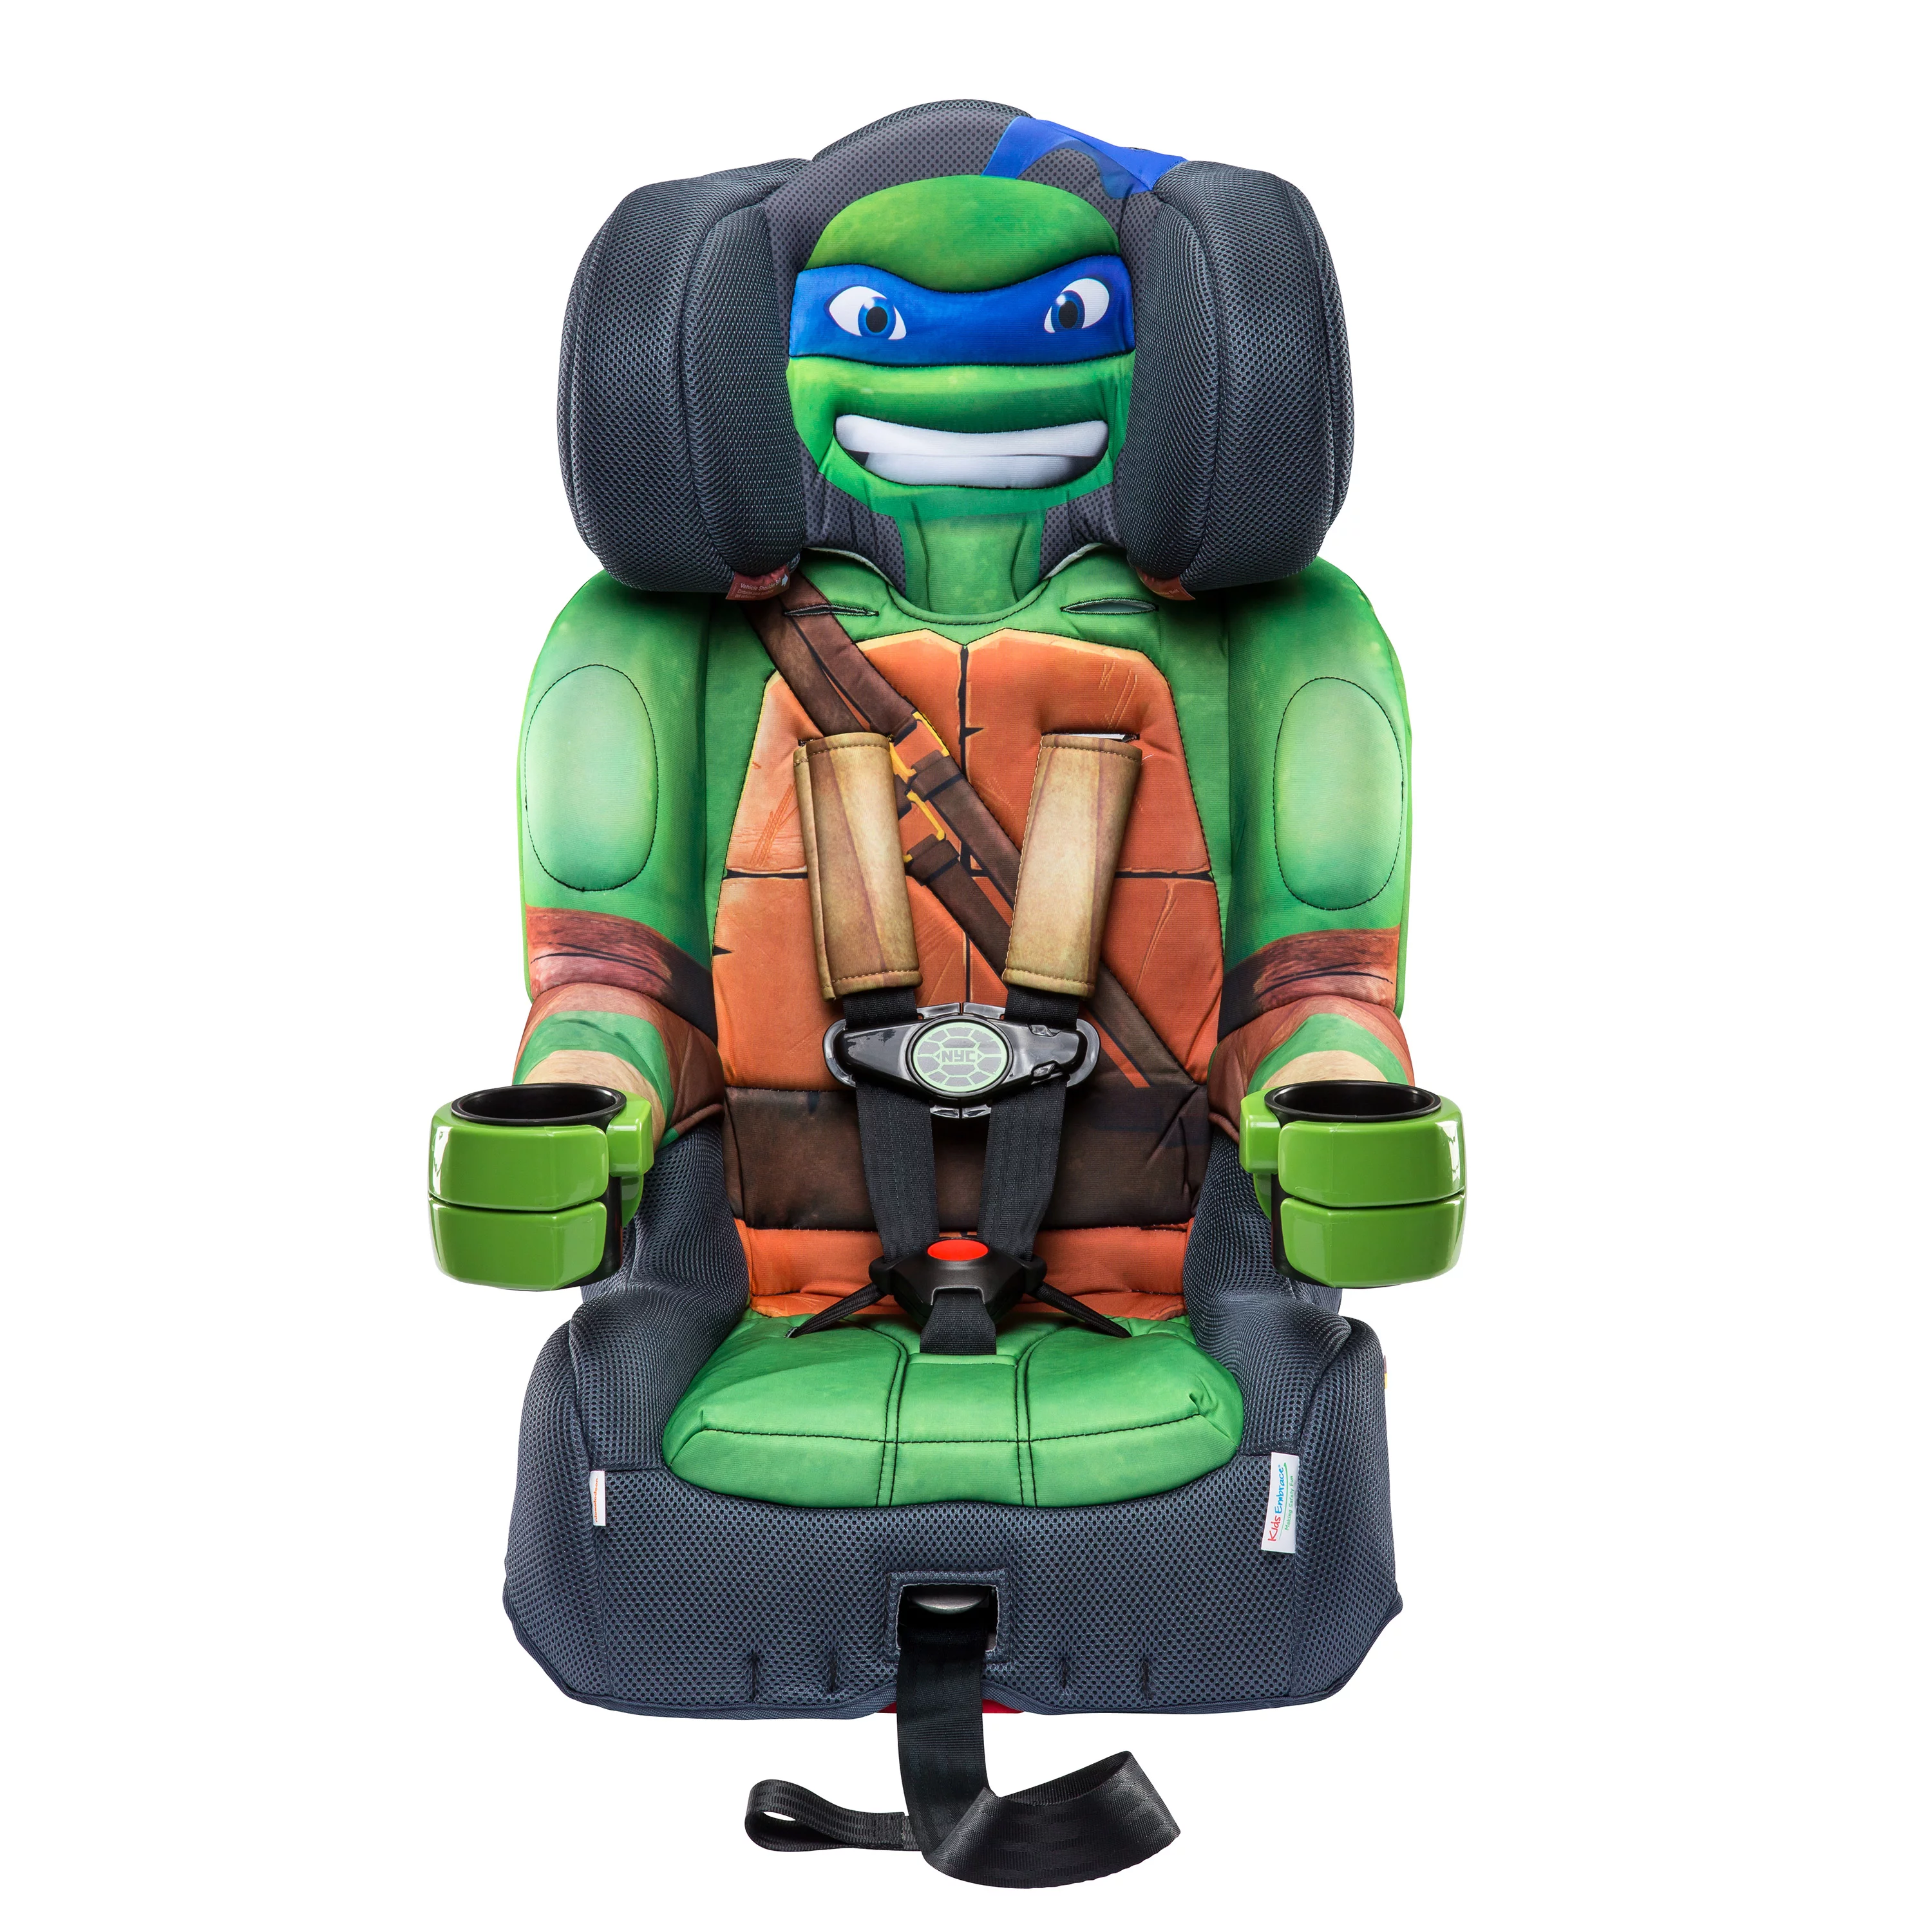 KidsEmbrace Combination Booster Car Seat, Nickelodeon Teenage Mutant Ninja Turtles Leo